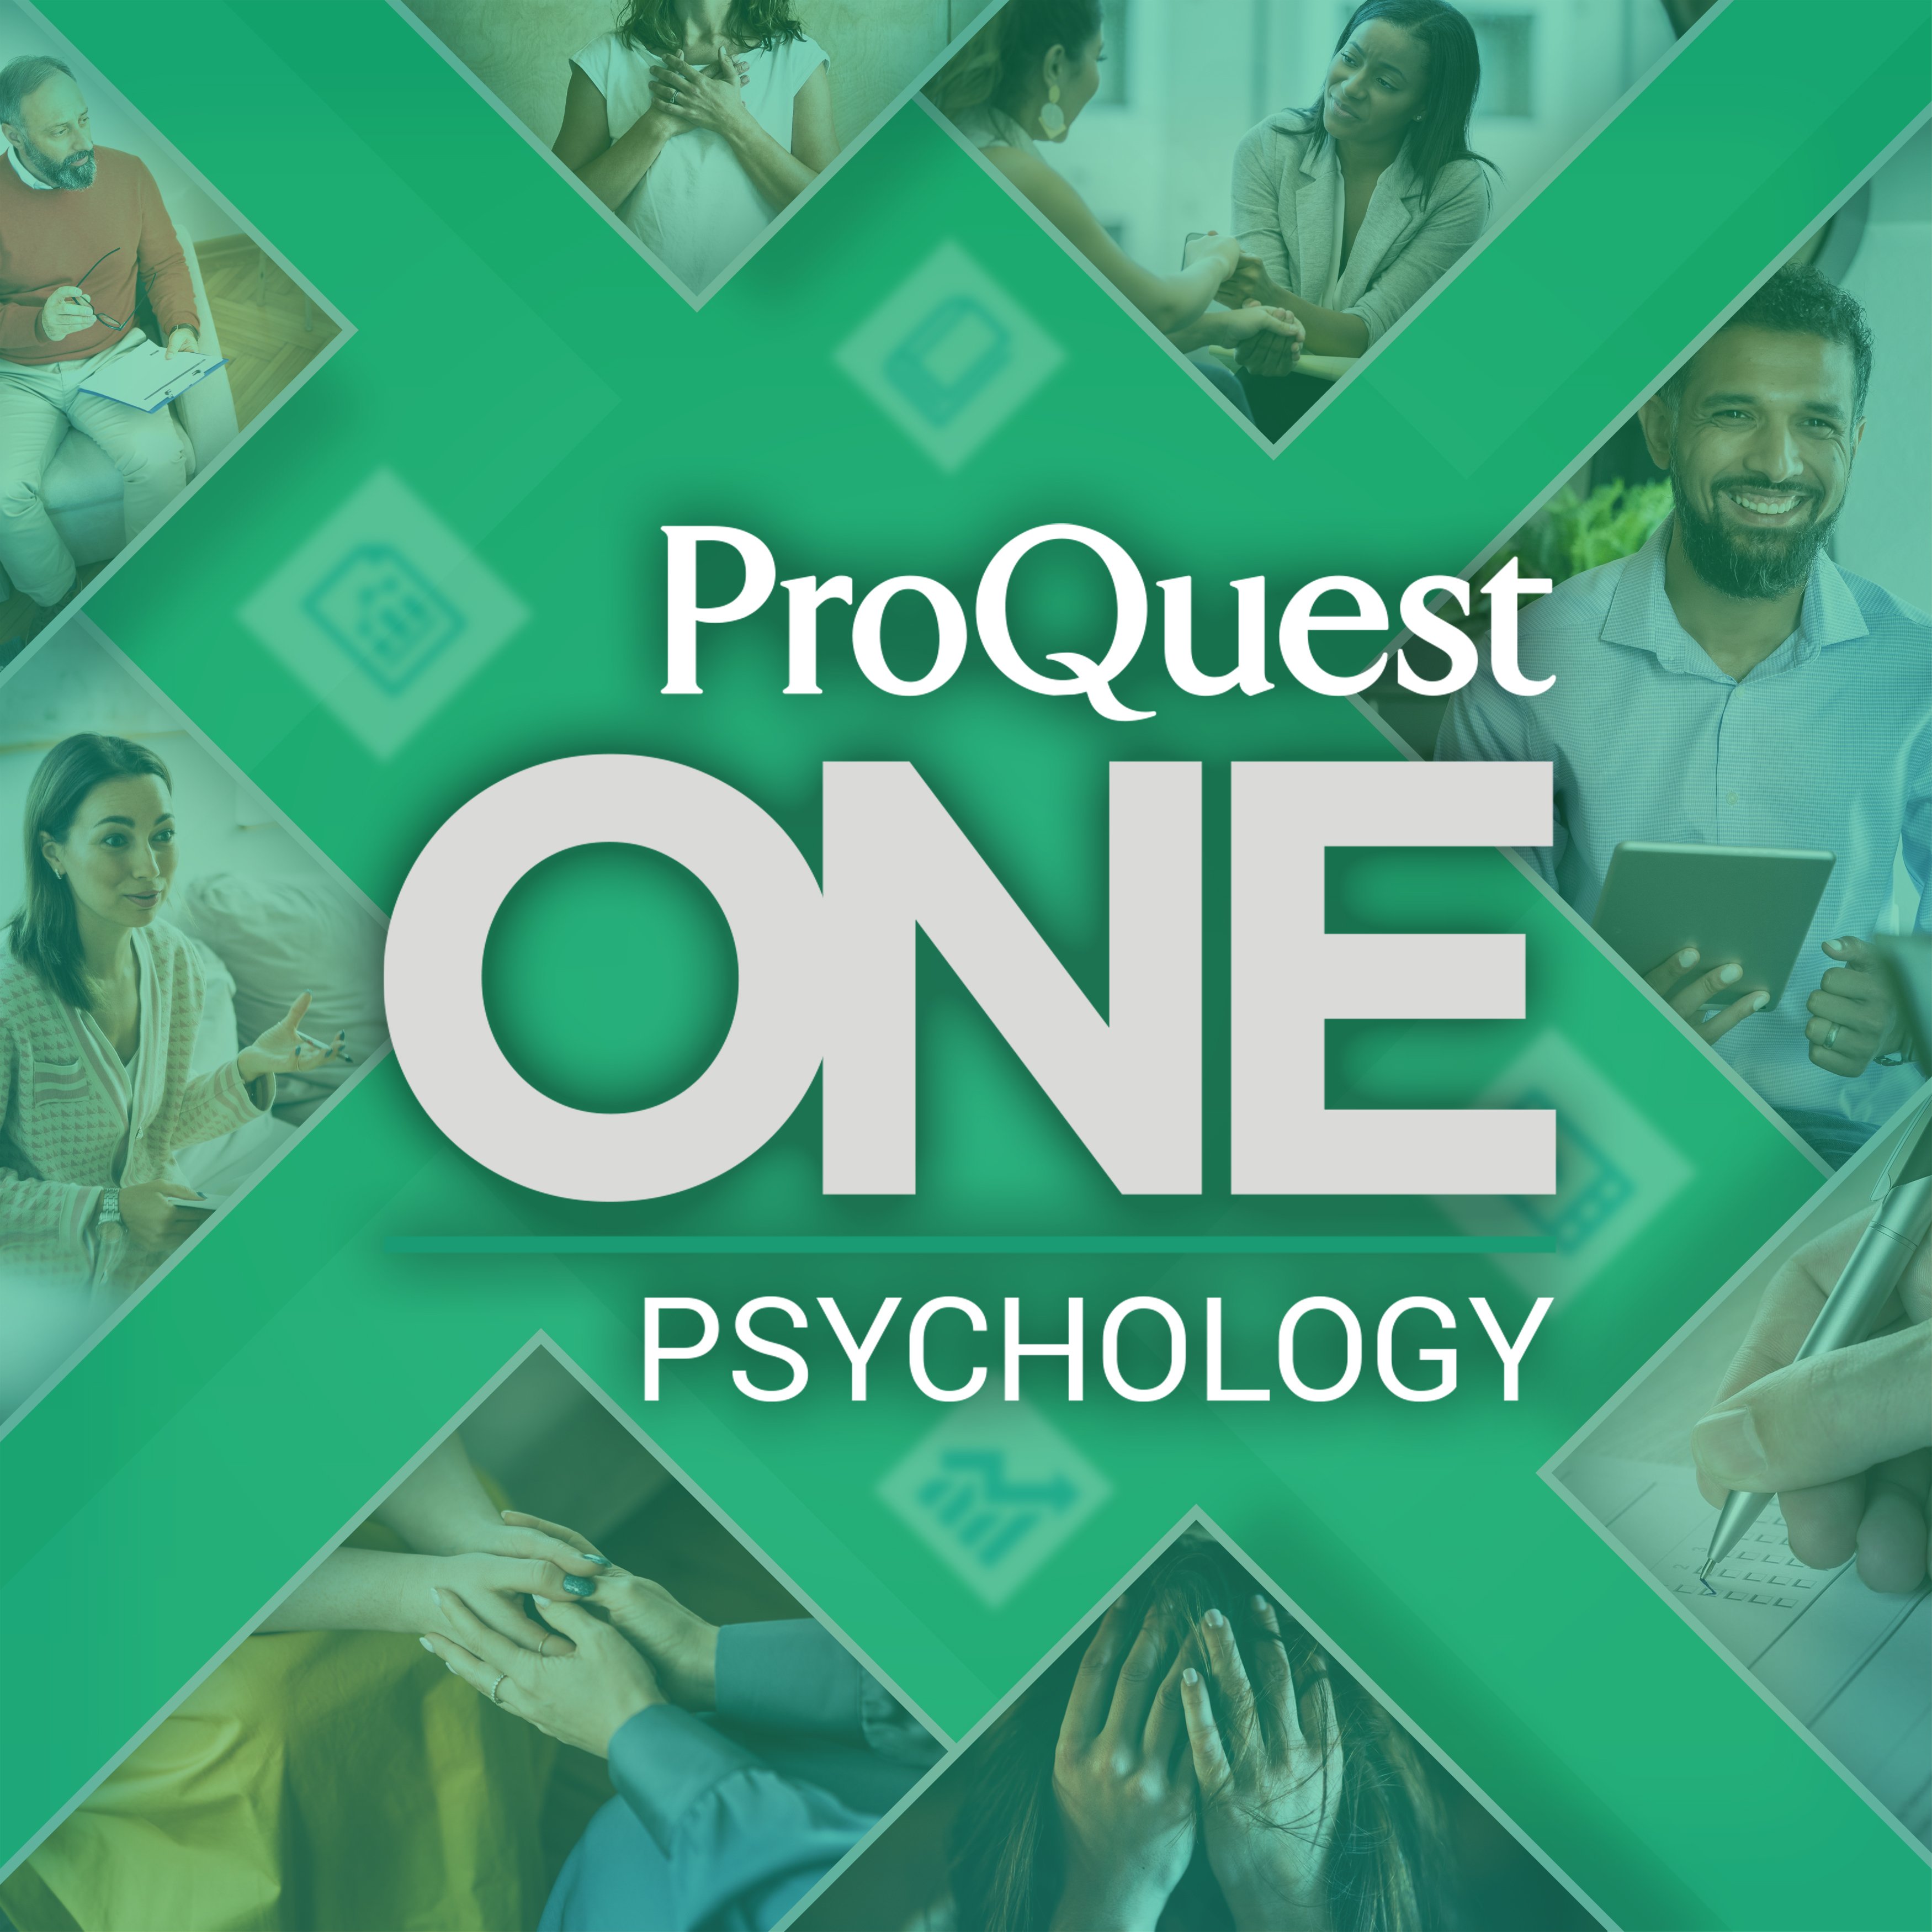 ProQuest One Psychology